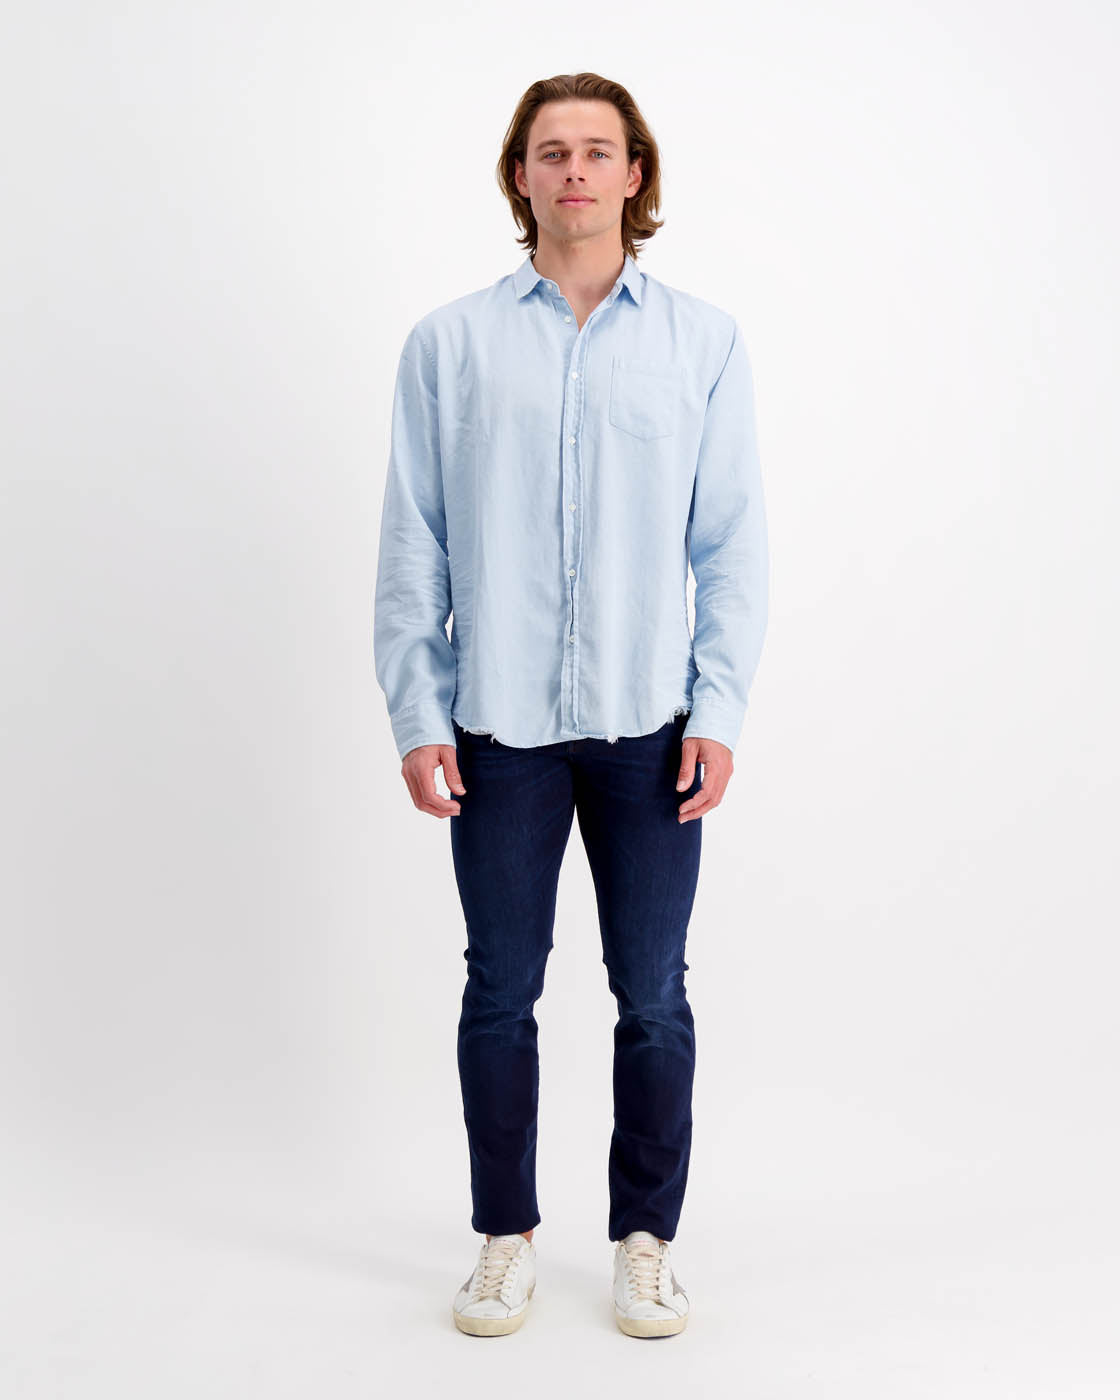 Luke Cotton Denim Shirt in Classic Blue Wash